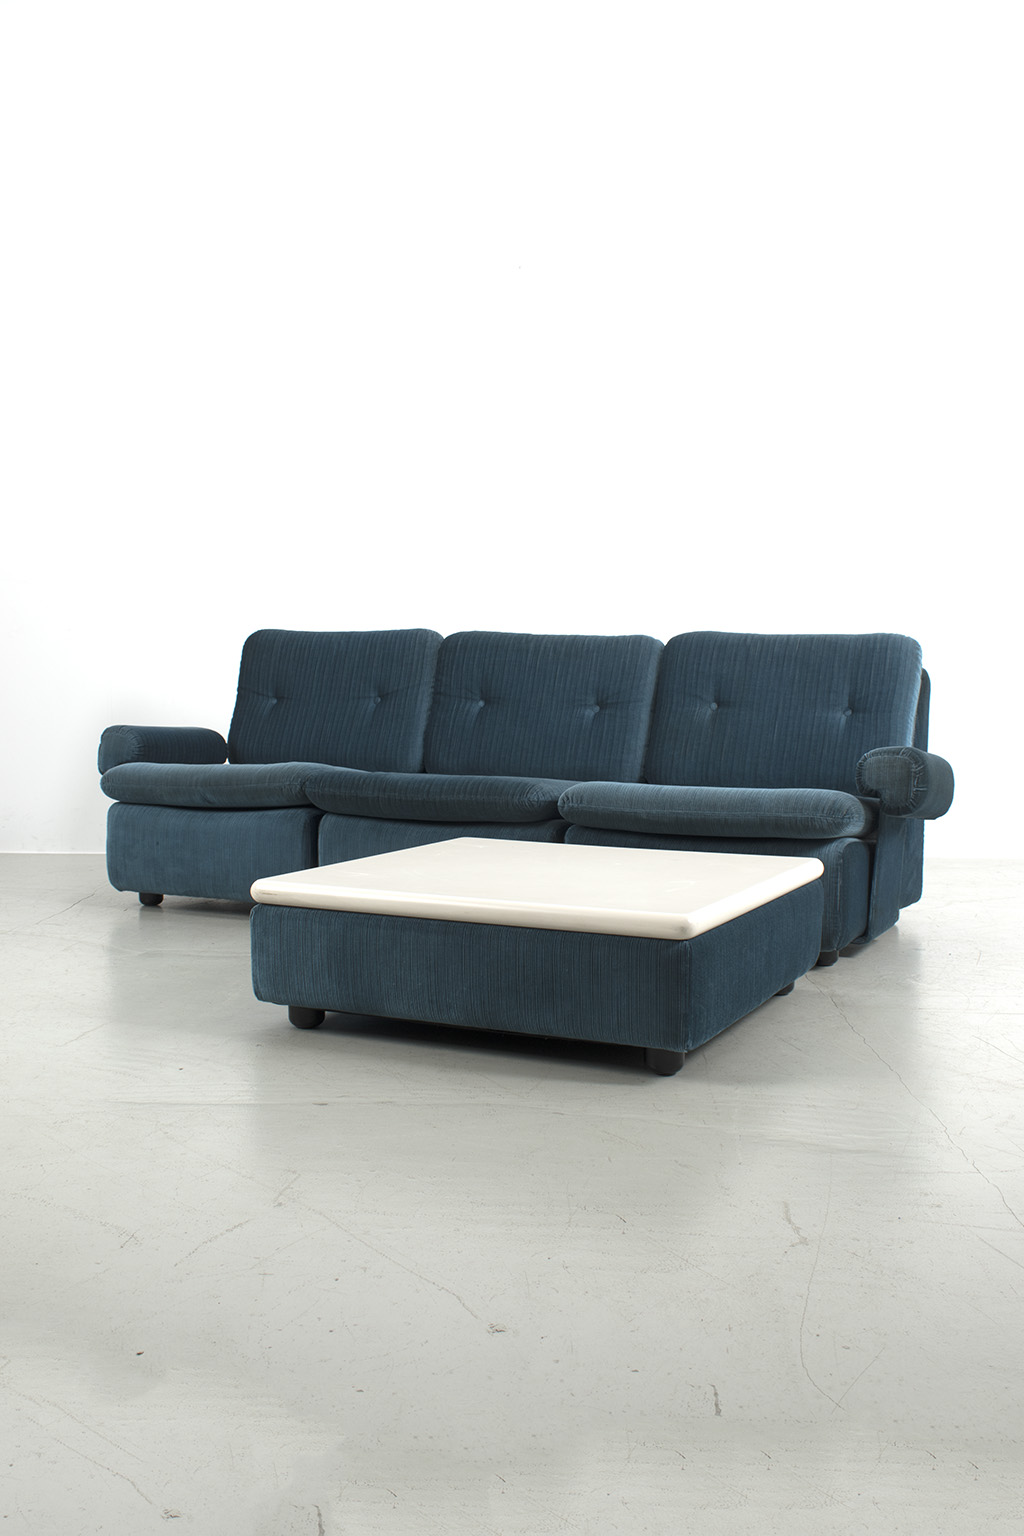 Modular sofa with coffee table